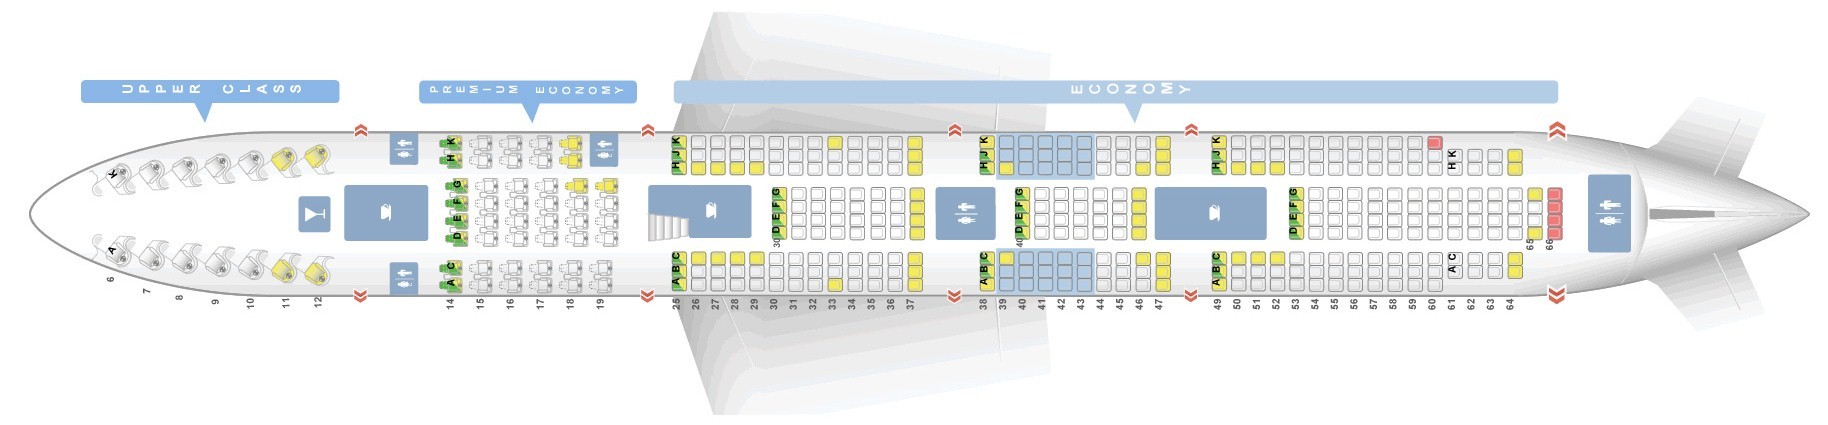 747 400 Seating Chart